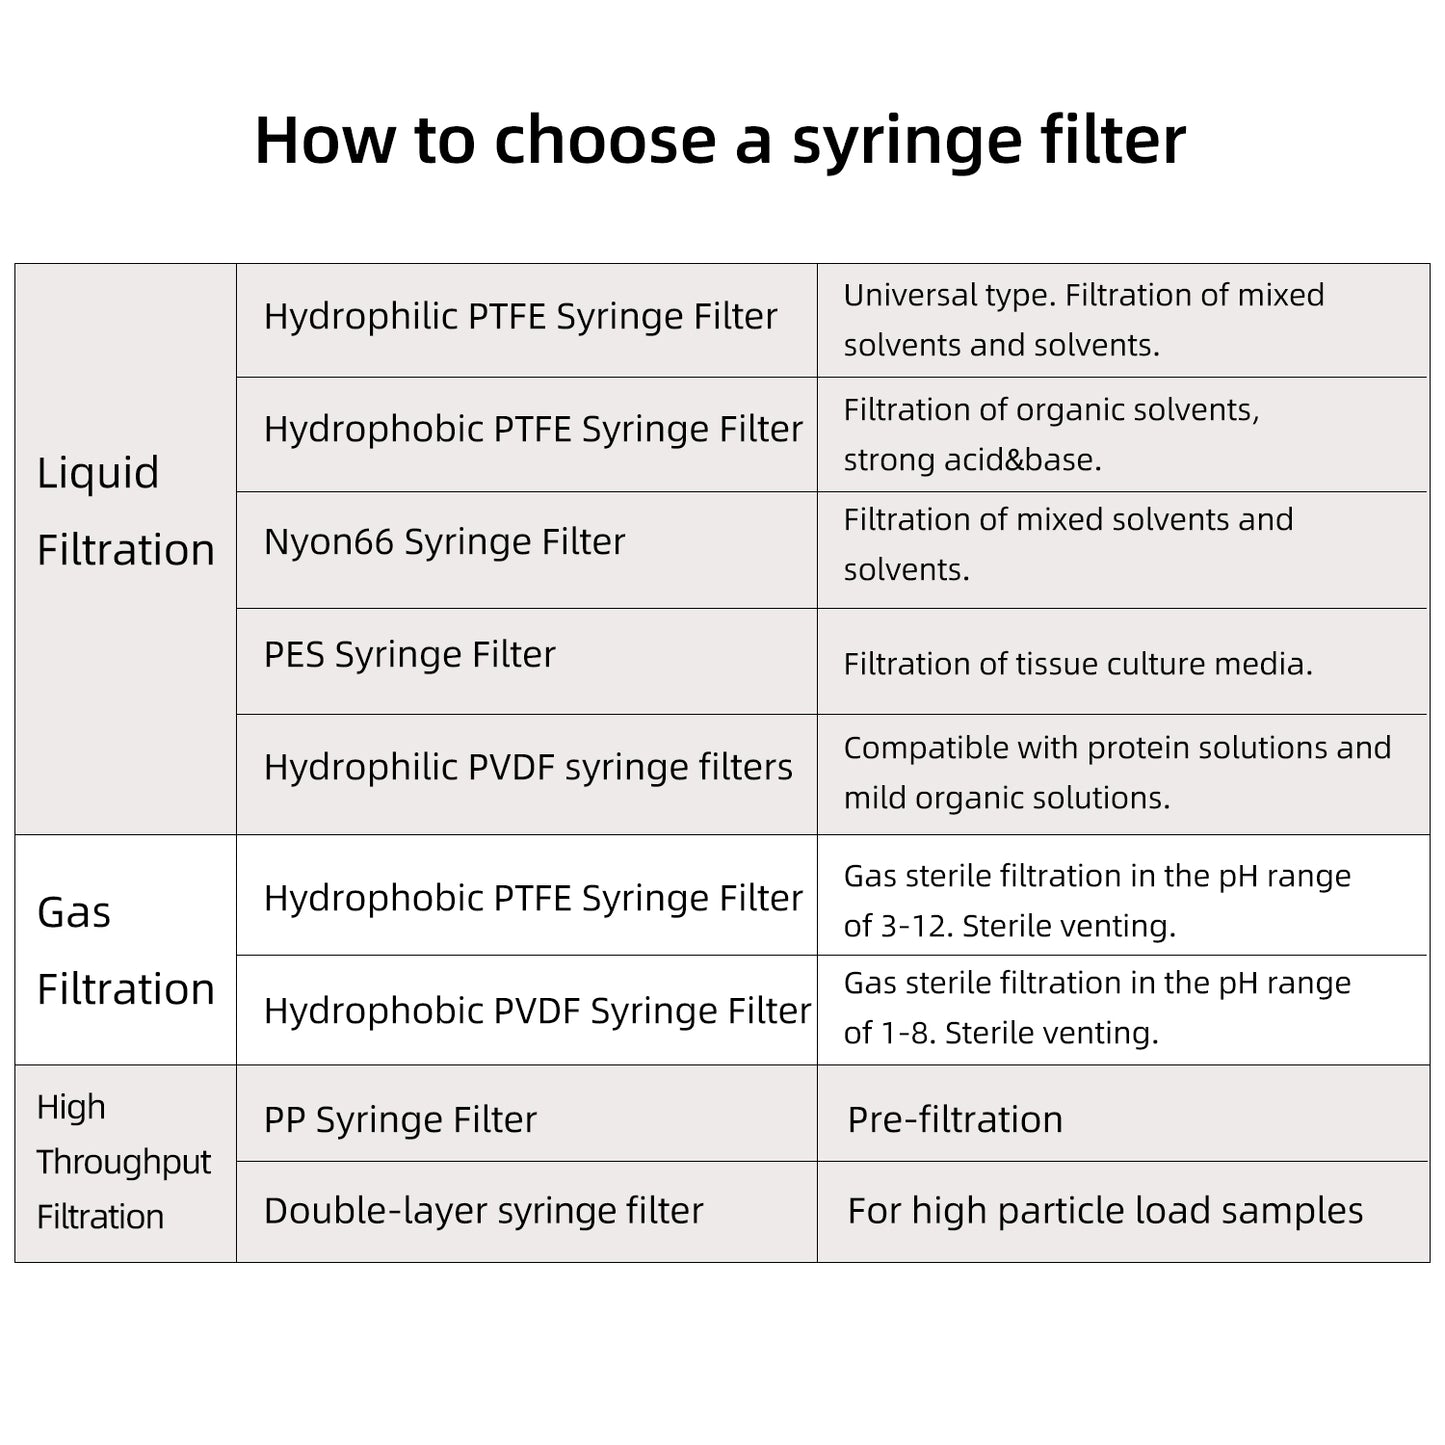 COBETTER Green Hydrophilic Nylon Syringe Filters Non-sterile 100pcs/pk